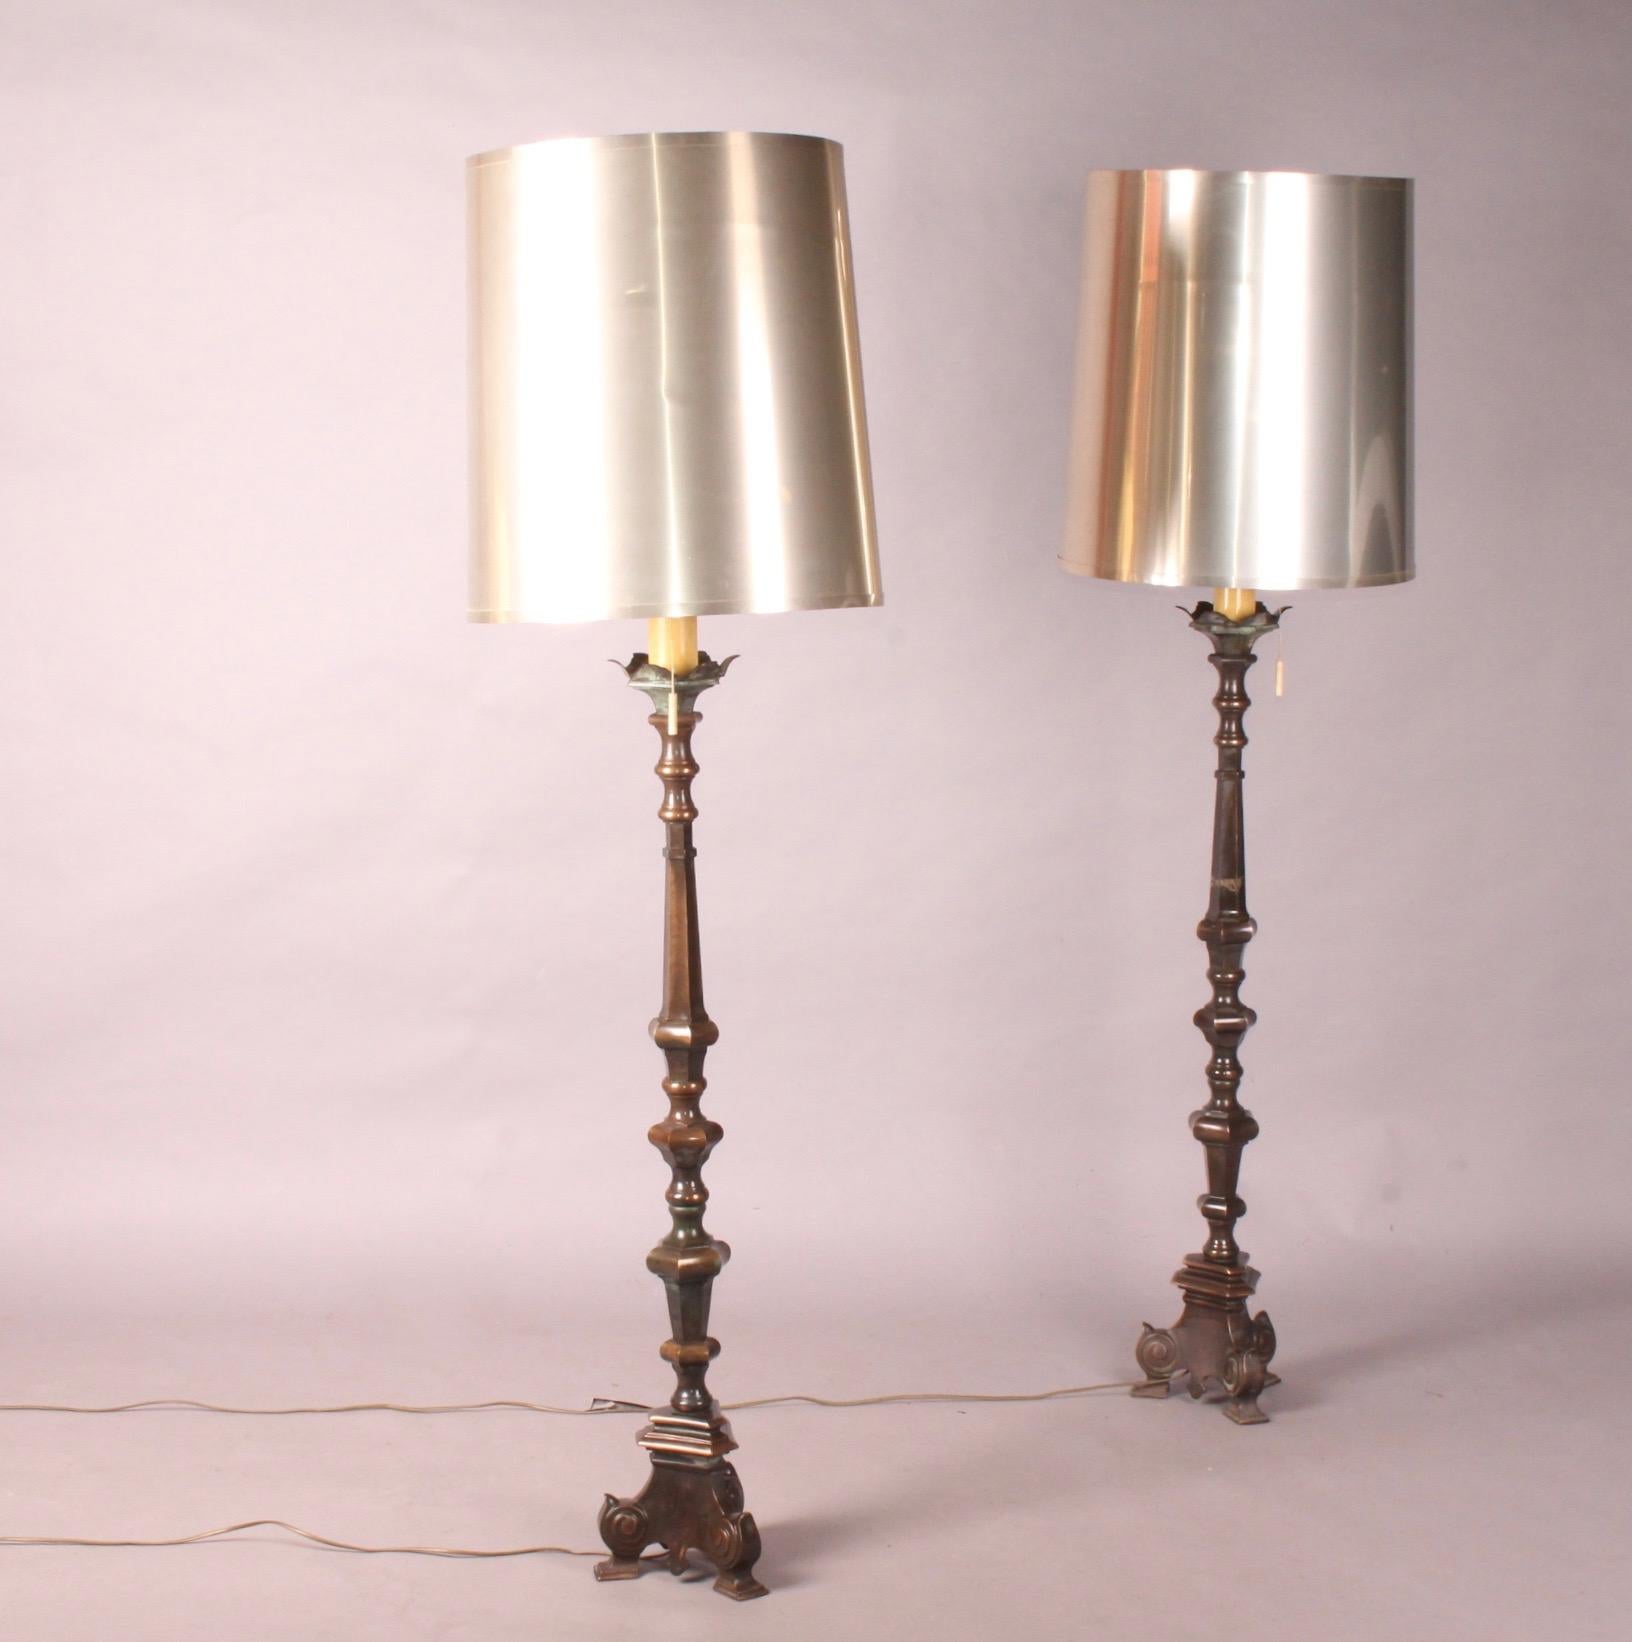 Pair of bronze floor lamp and plastic shade.